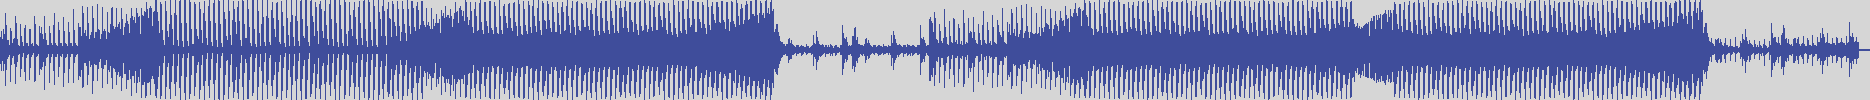 nf_boyz_records [NFY049] The House Rhythms - Bismark [Onda House Mix] audio wave form